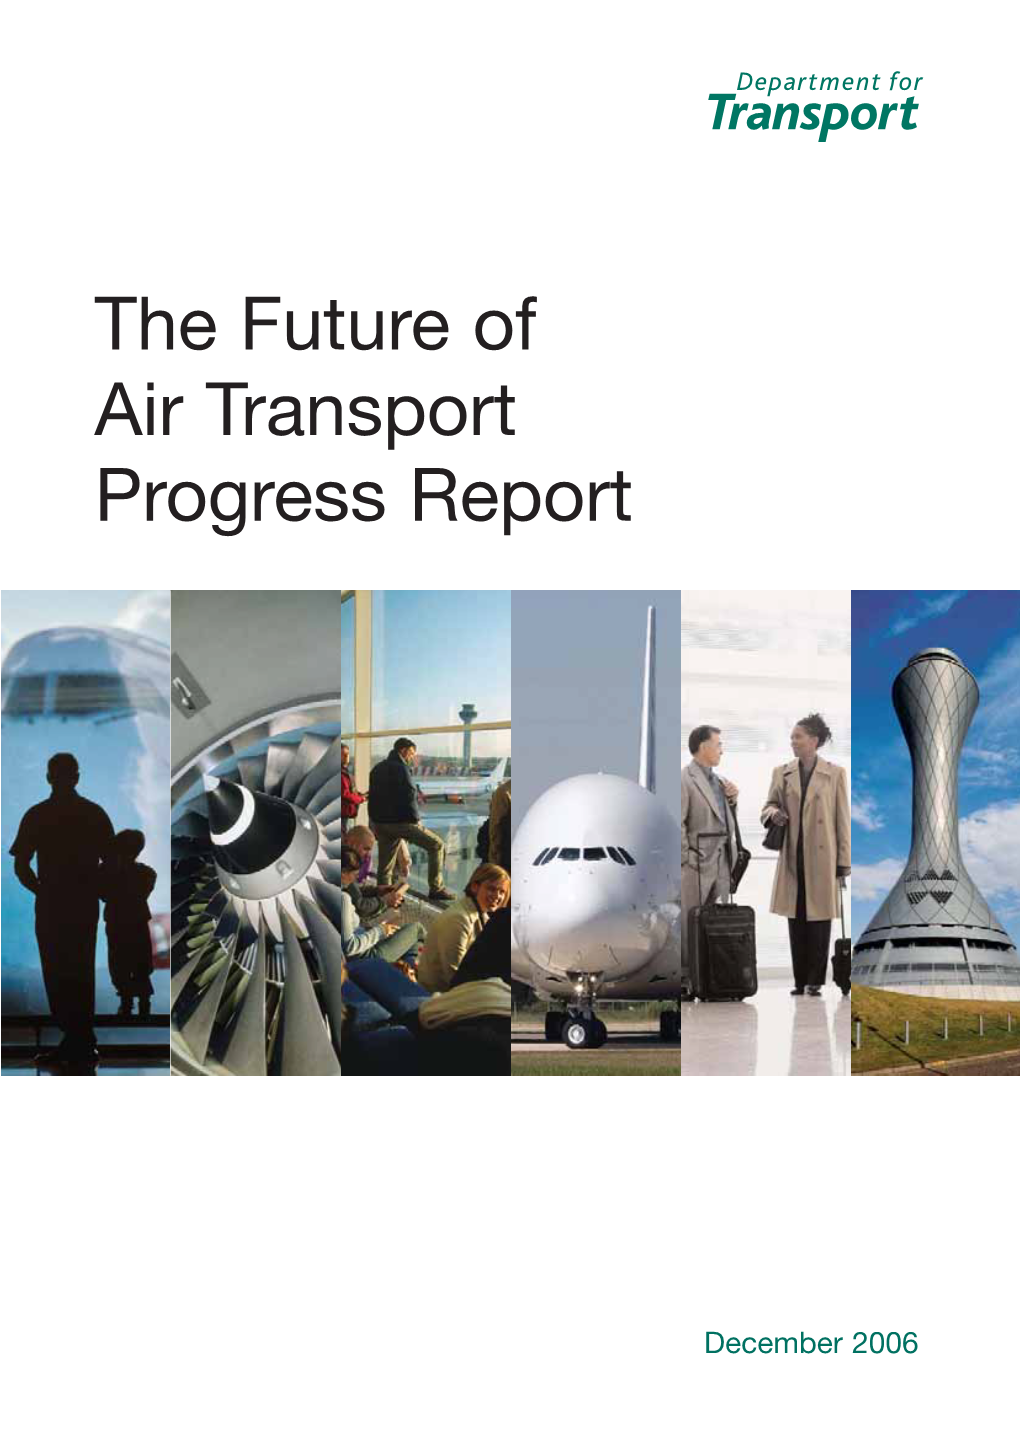 The Future of Air Transport Progress Report